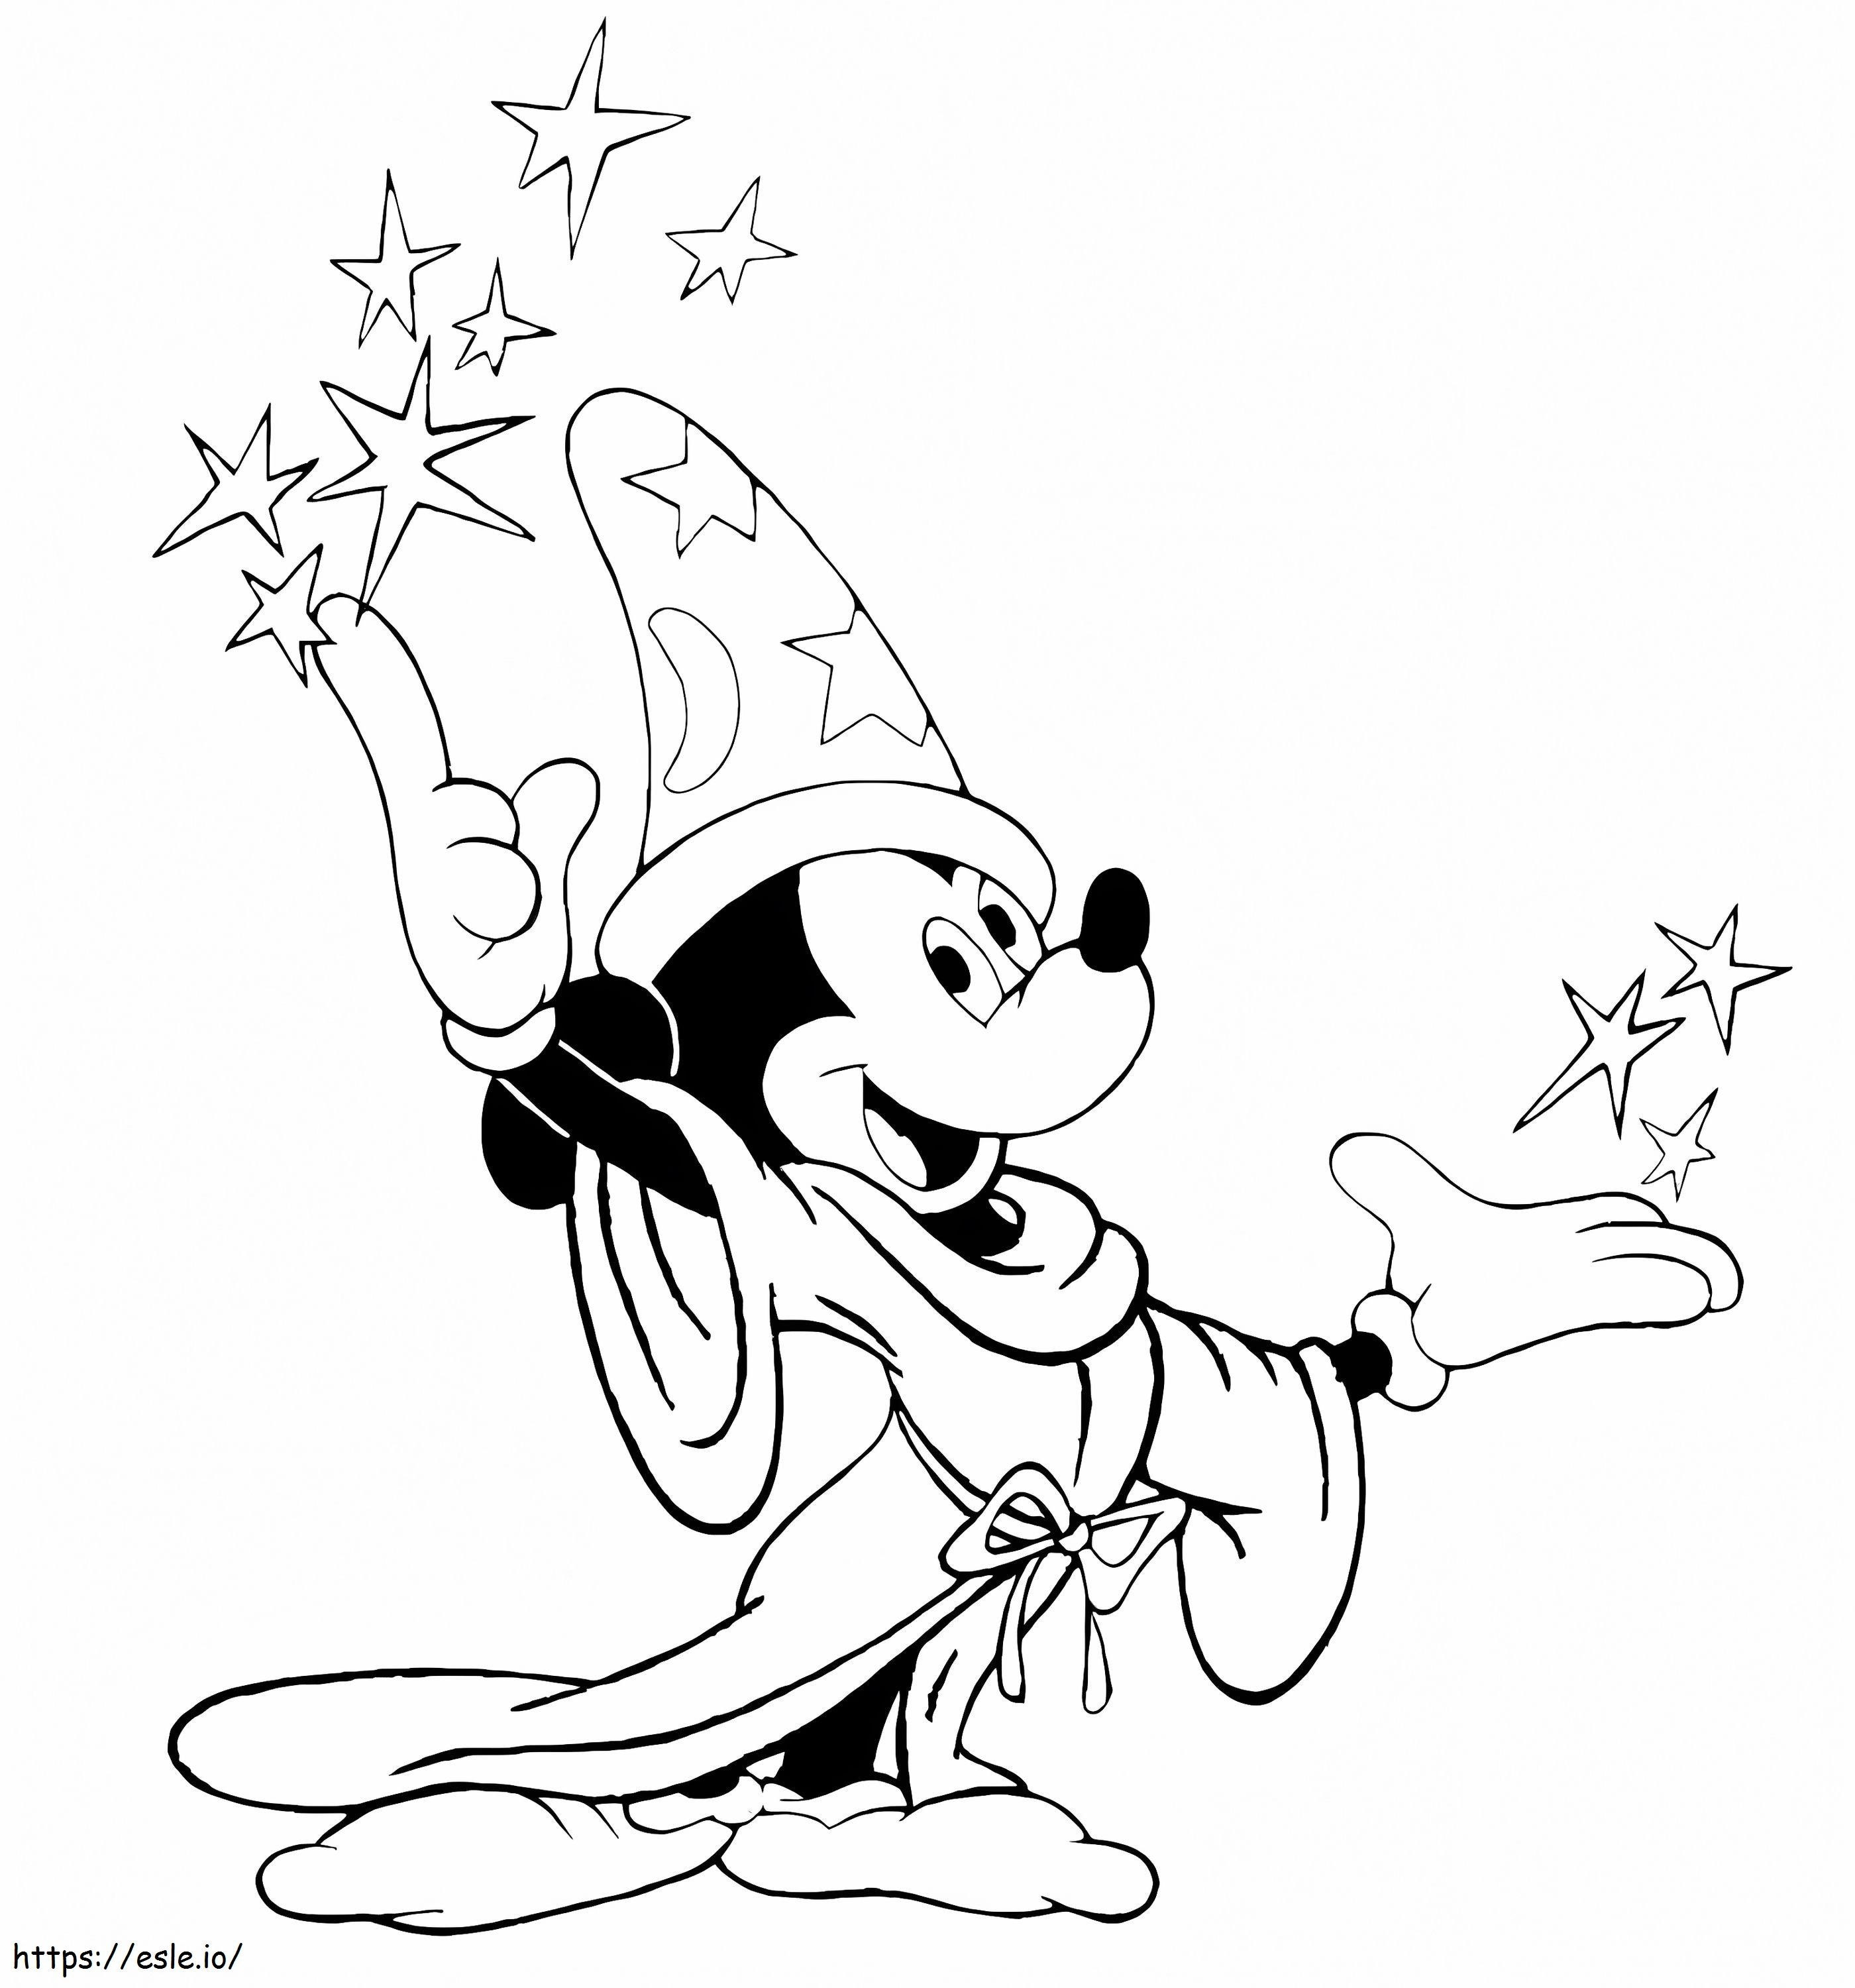 Fantasia Mickey Magician coloring page